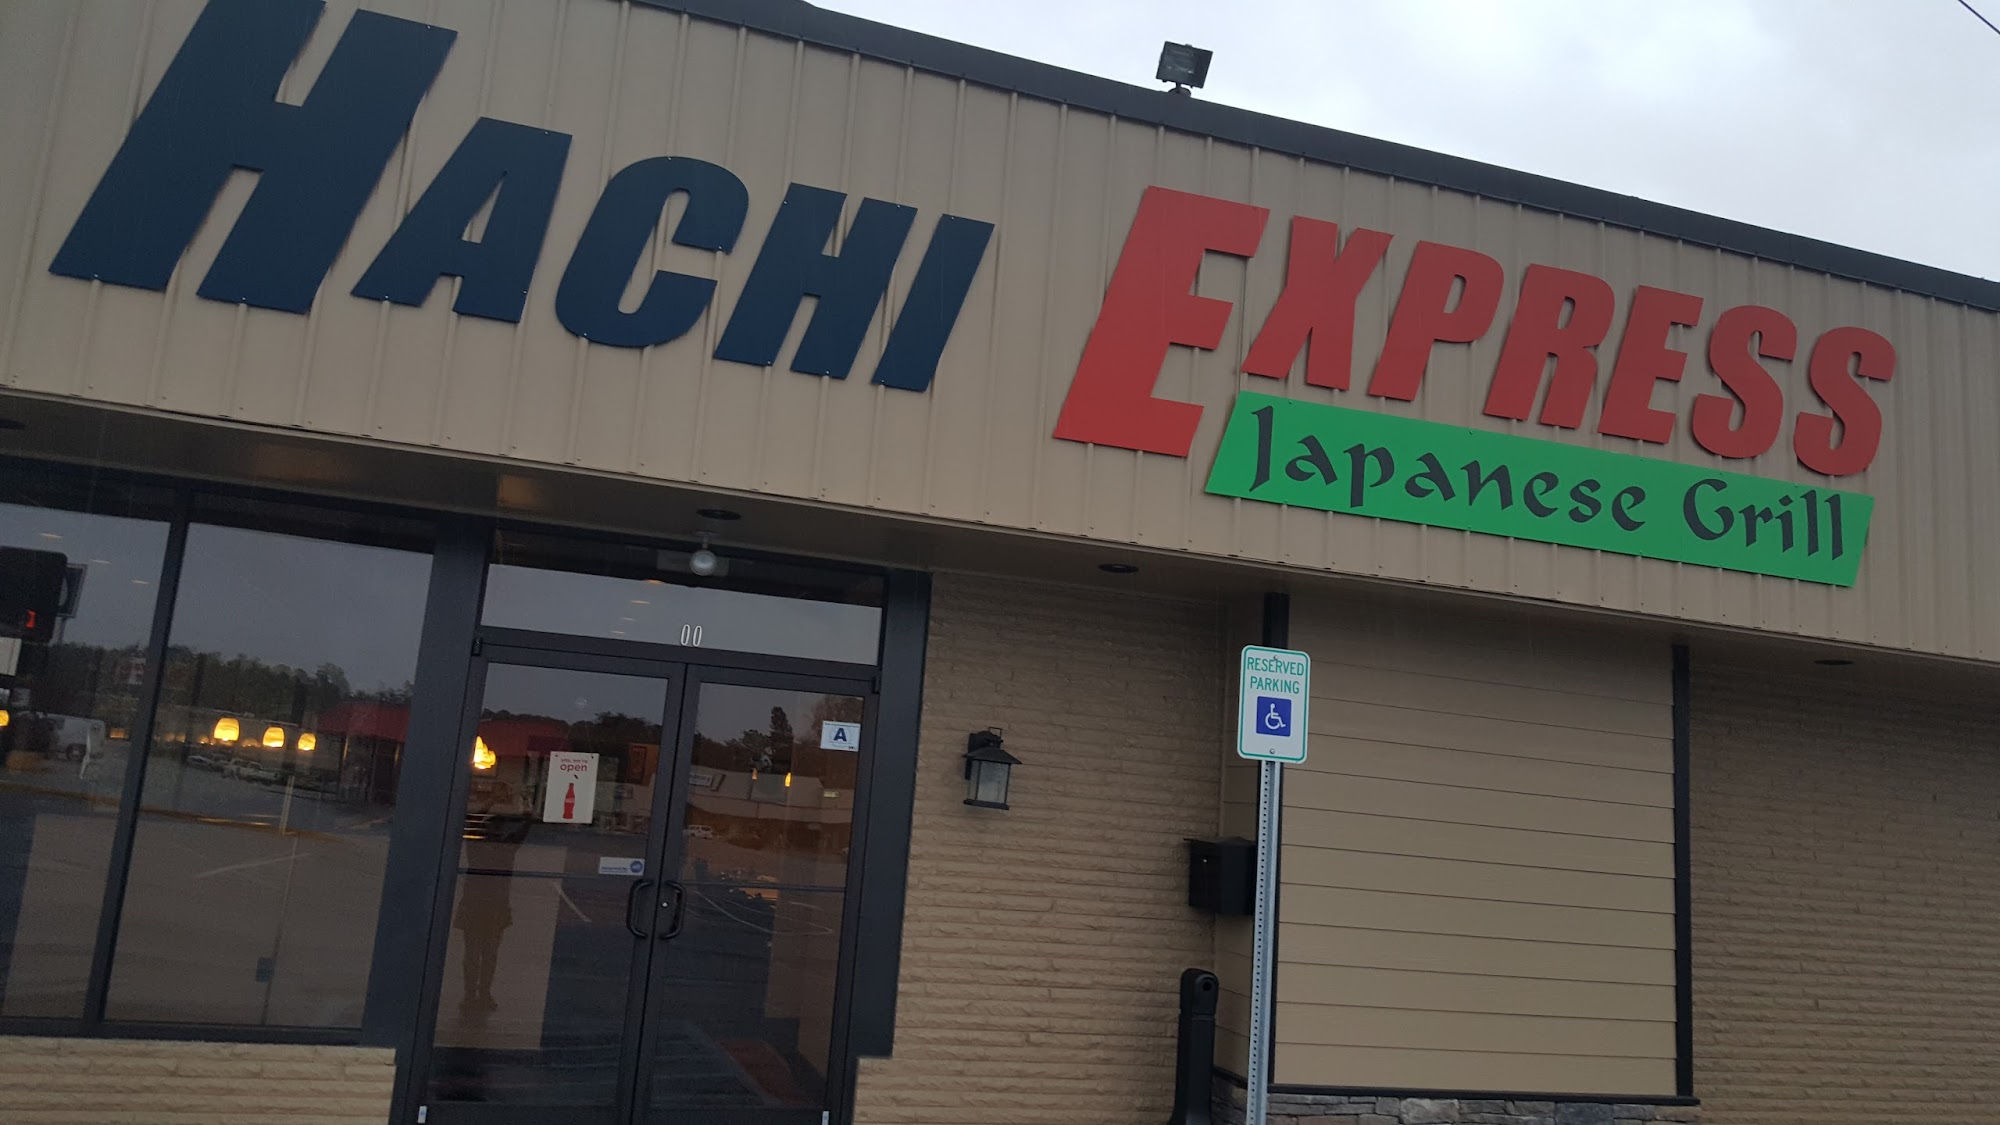 Hachi Express Japanese Grille Restaurant